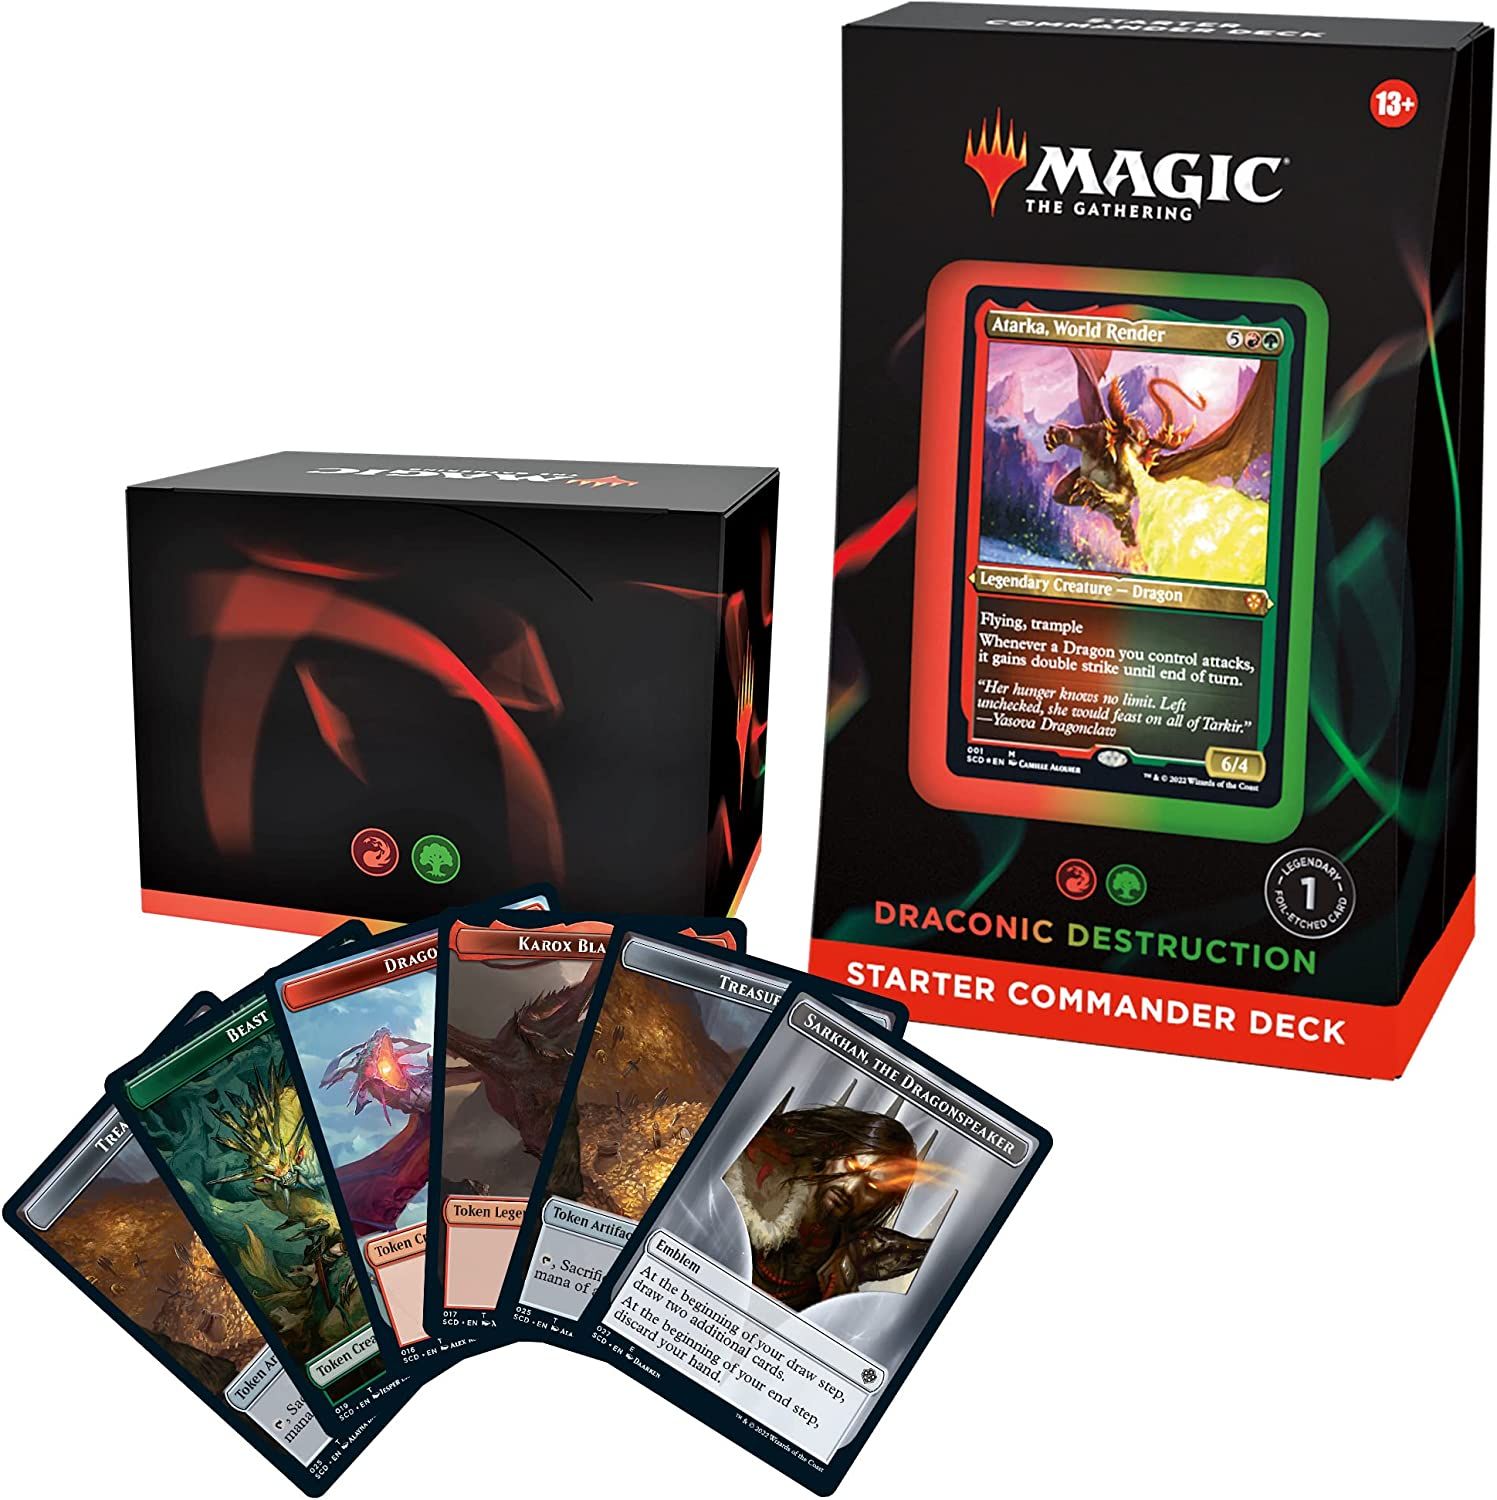 Magic The Gathering Starter Commander Deck – Draconic Destruction 1